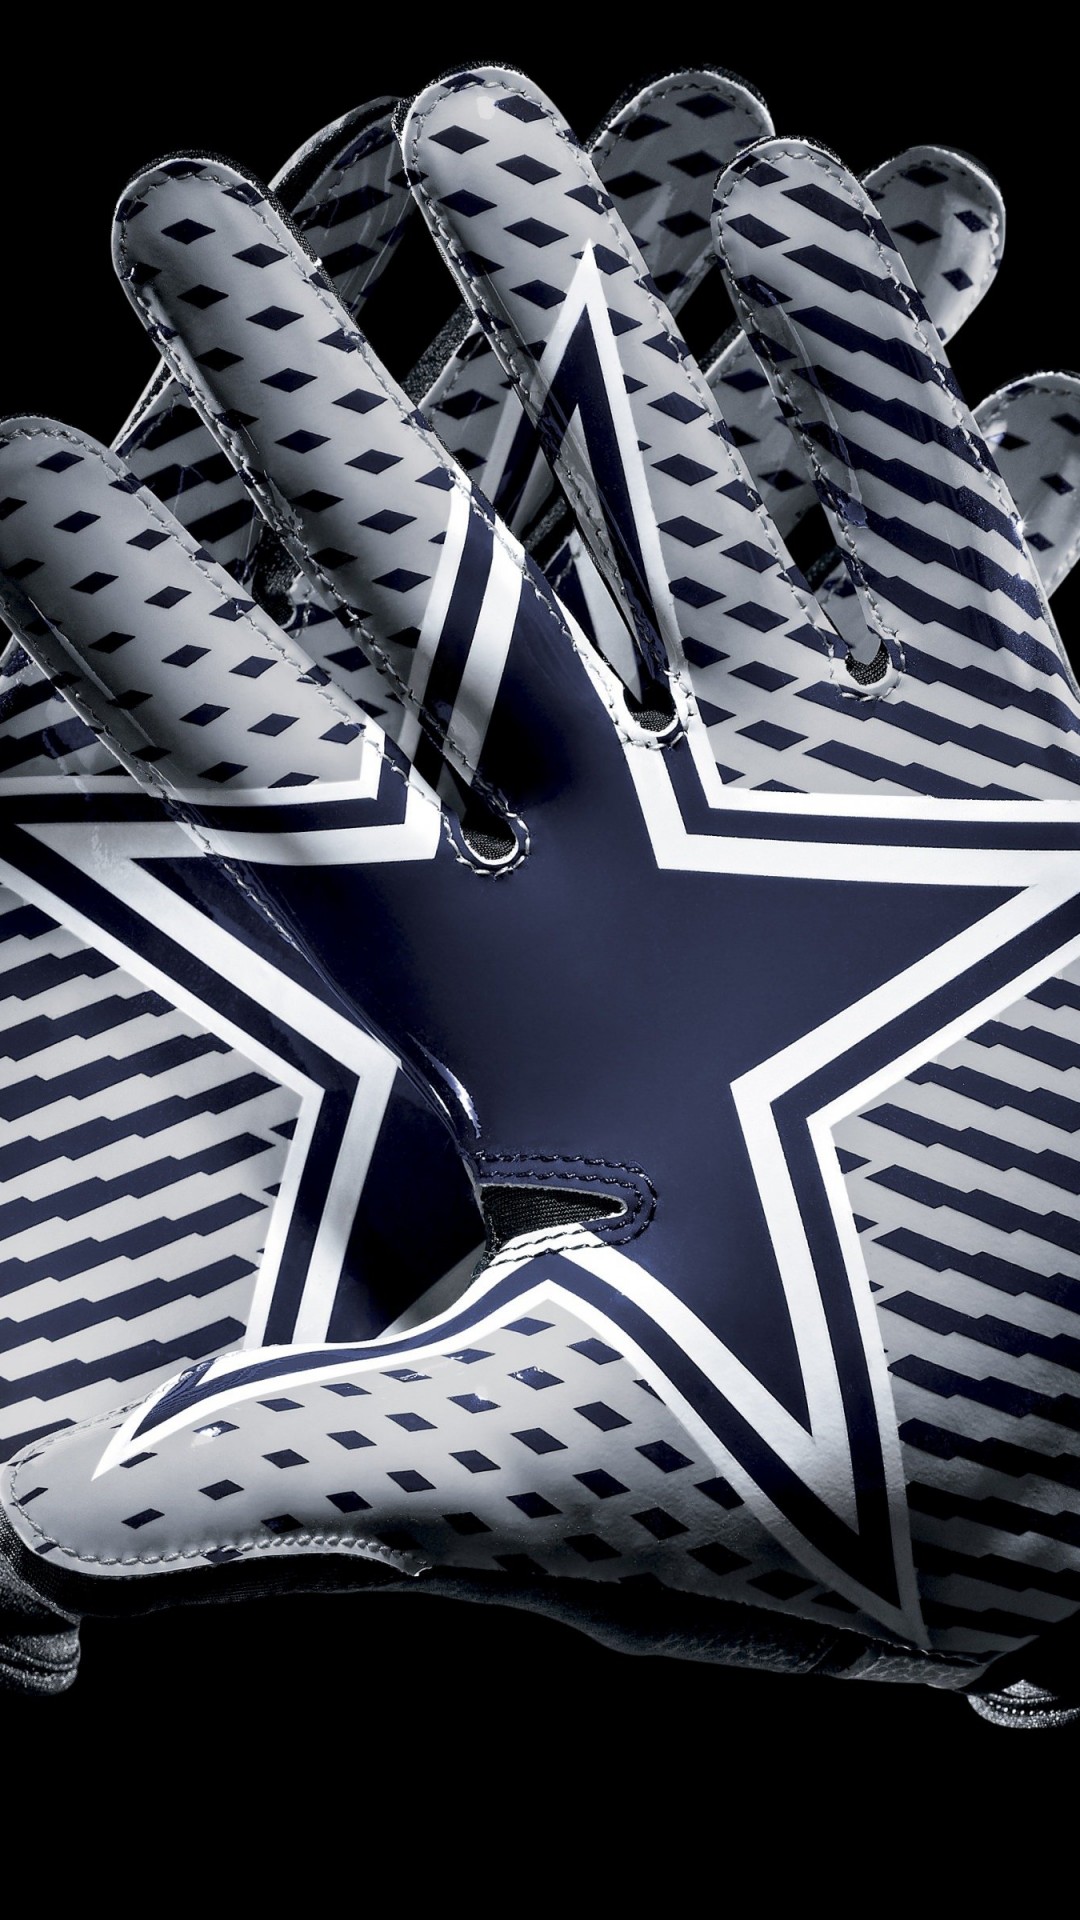 Dallas Cowboys Gloves Wallpaper for SAMSUNG Galaxy Note 3